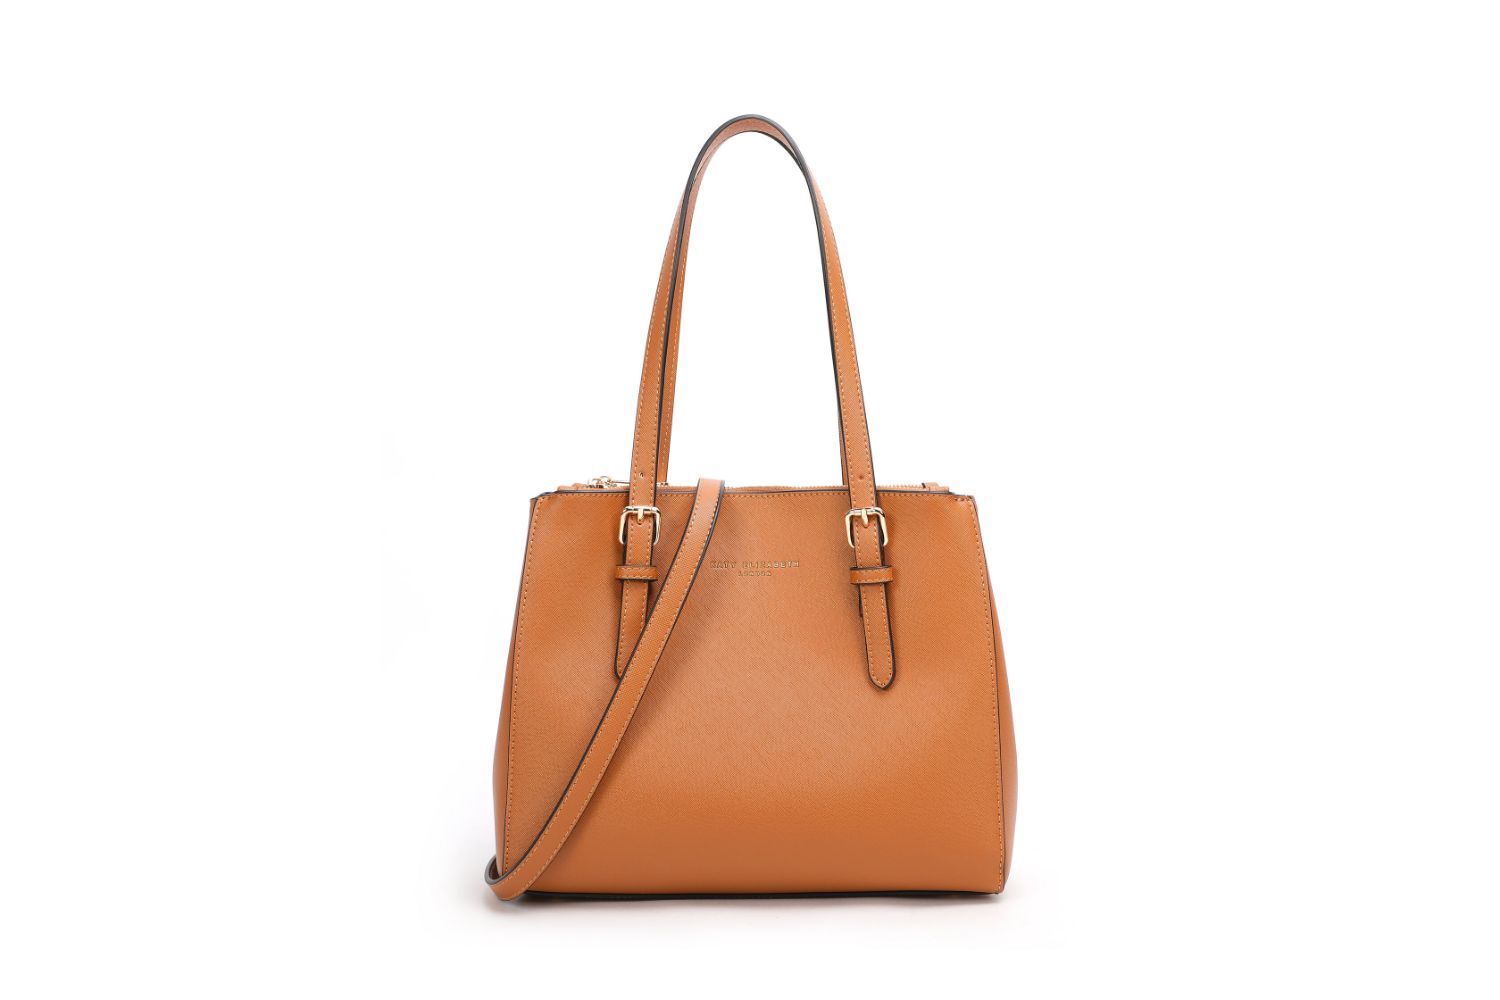 Katy Elizabeth London Designer Handbags - Brand New Stock Direct From Manufacturer - Retail Up To £189.99